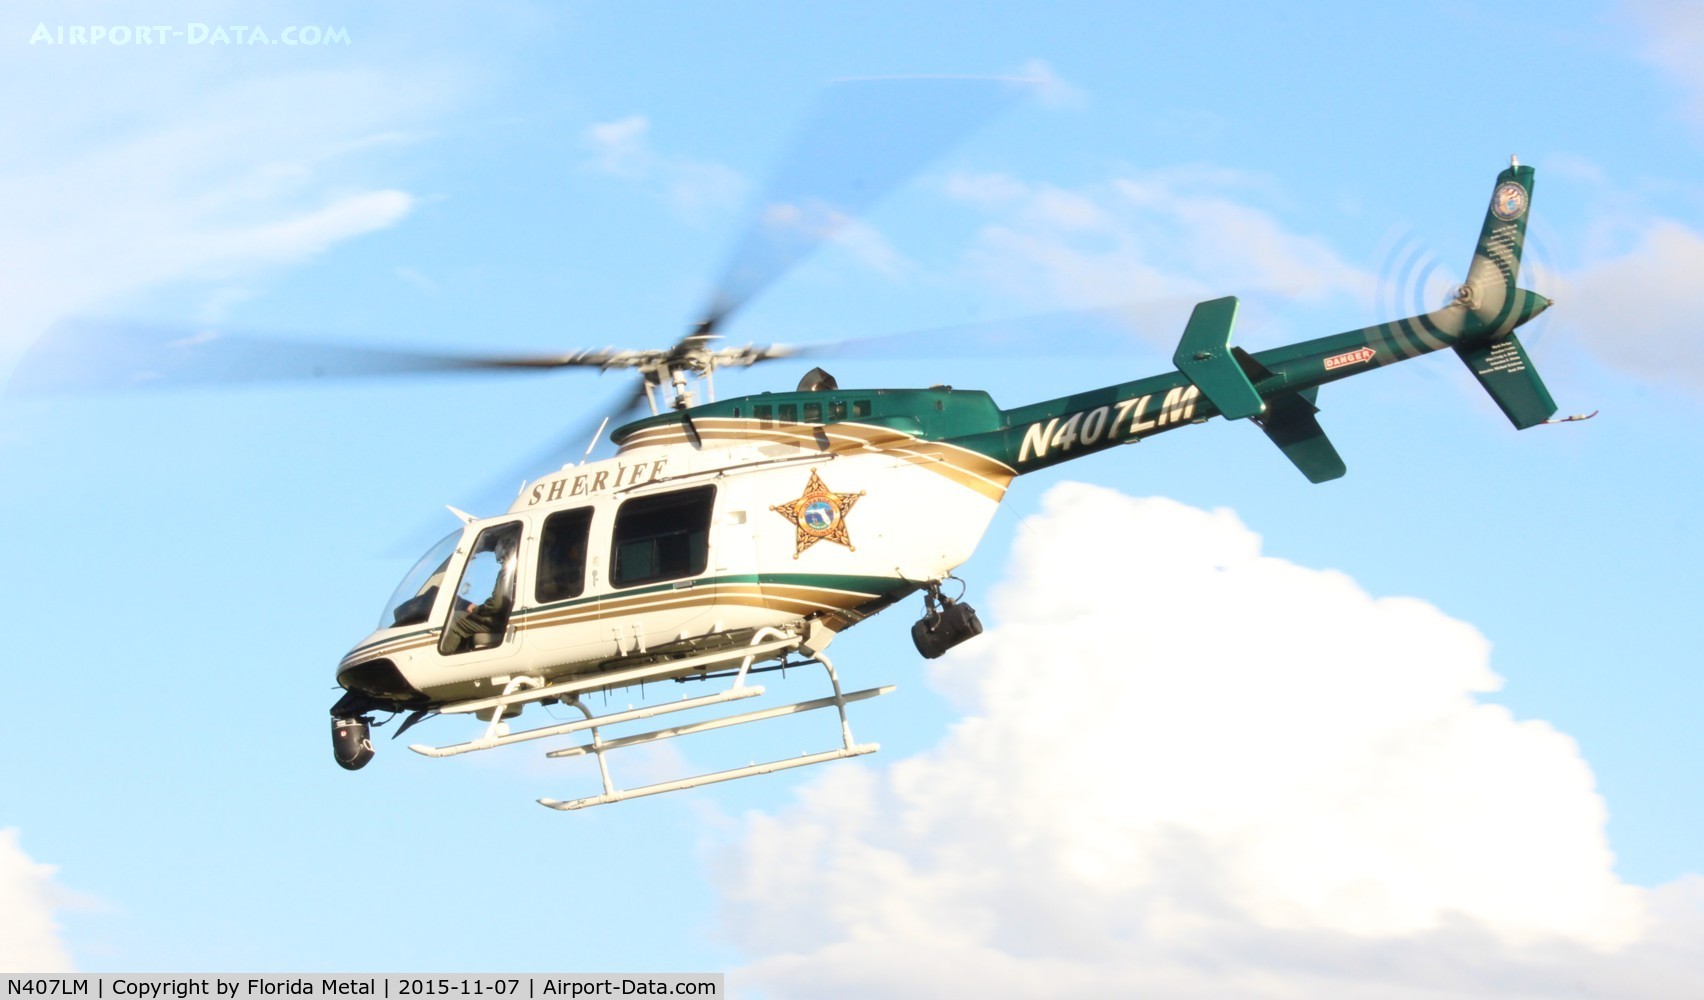 N407LM, 2007 Bell 407 C/N 53767, Orange County Sheriff at Oveido Mall